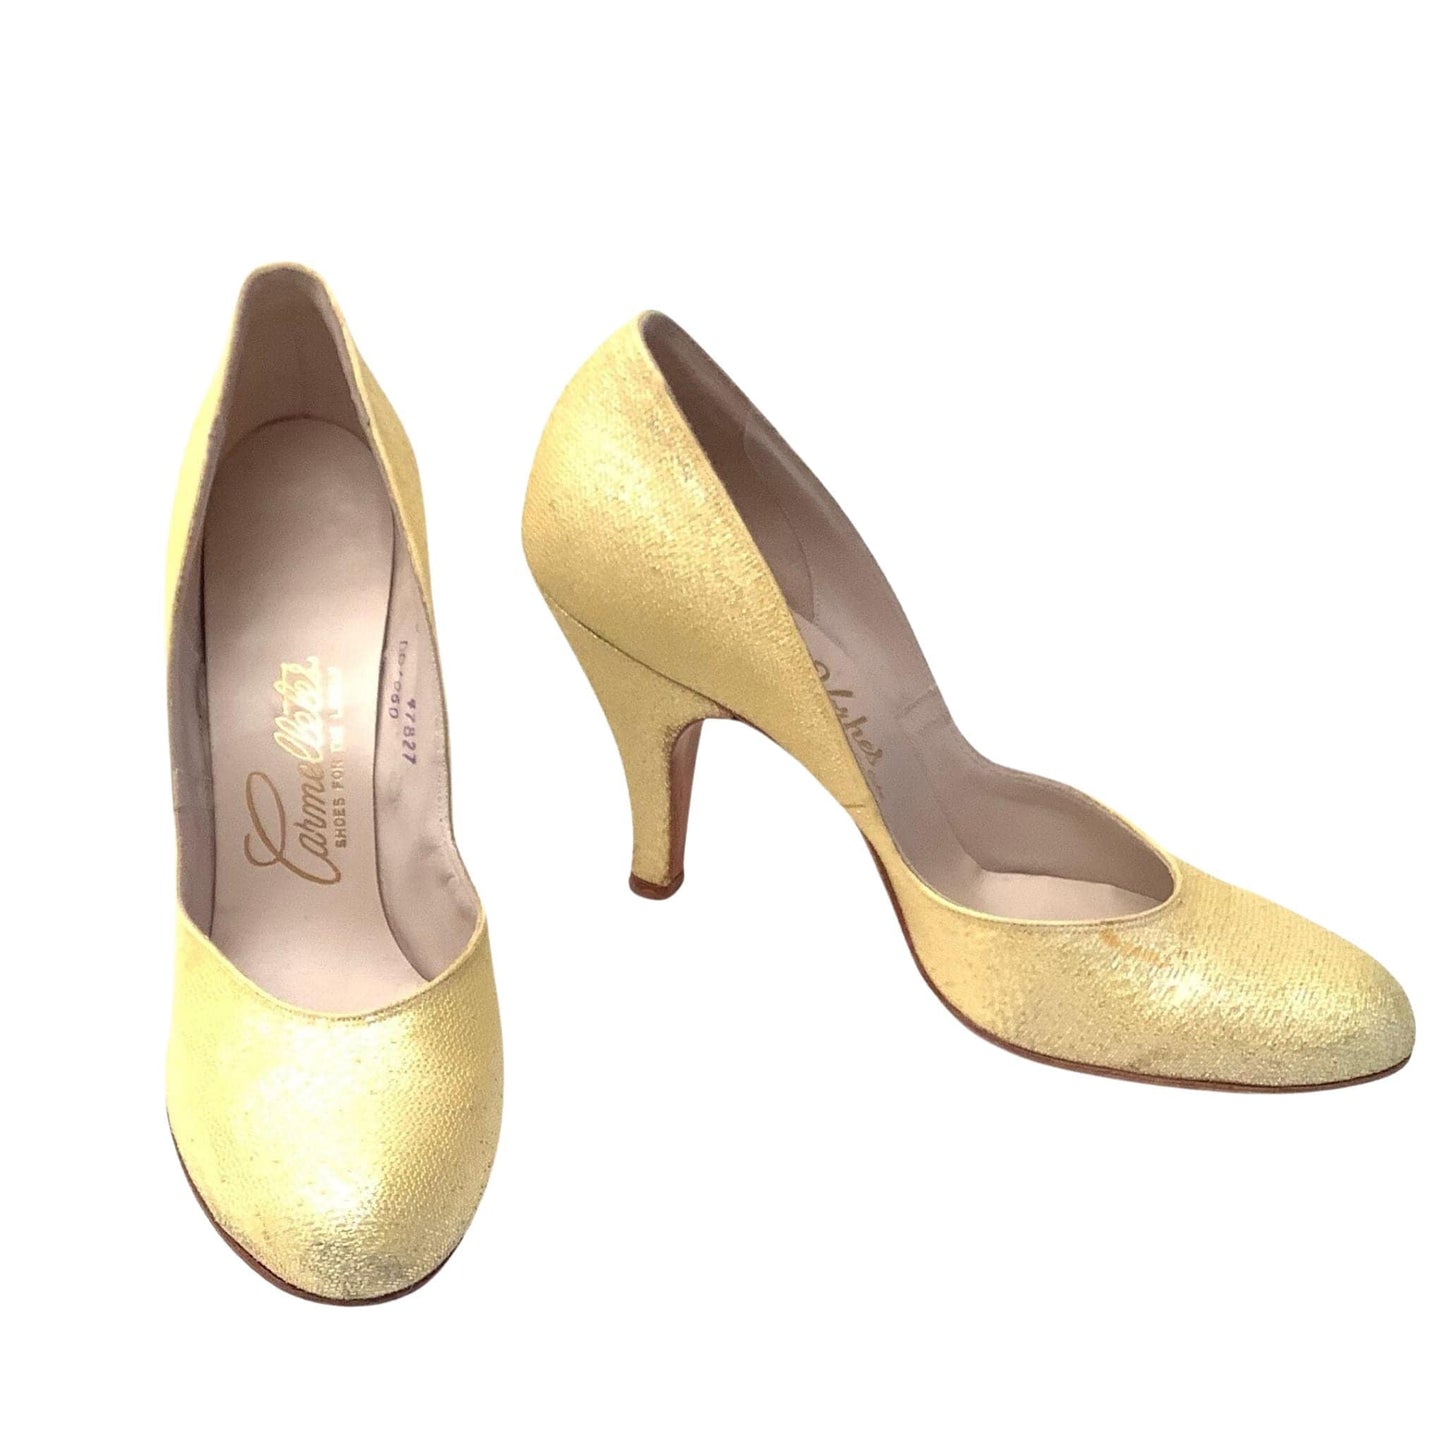 Vorhes Yellow Heels 7 / Yellow / Vintage 1930s